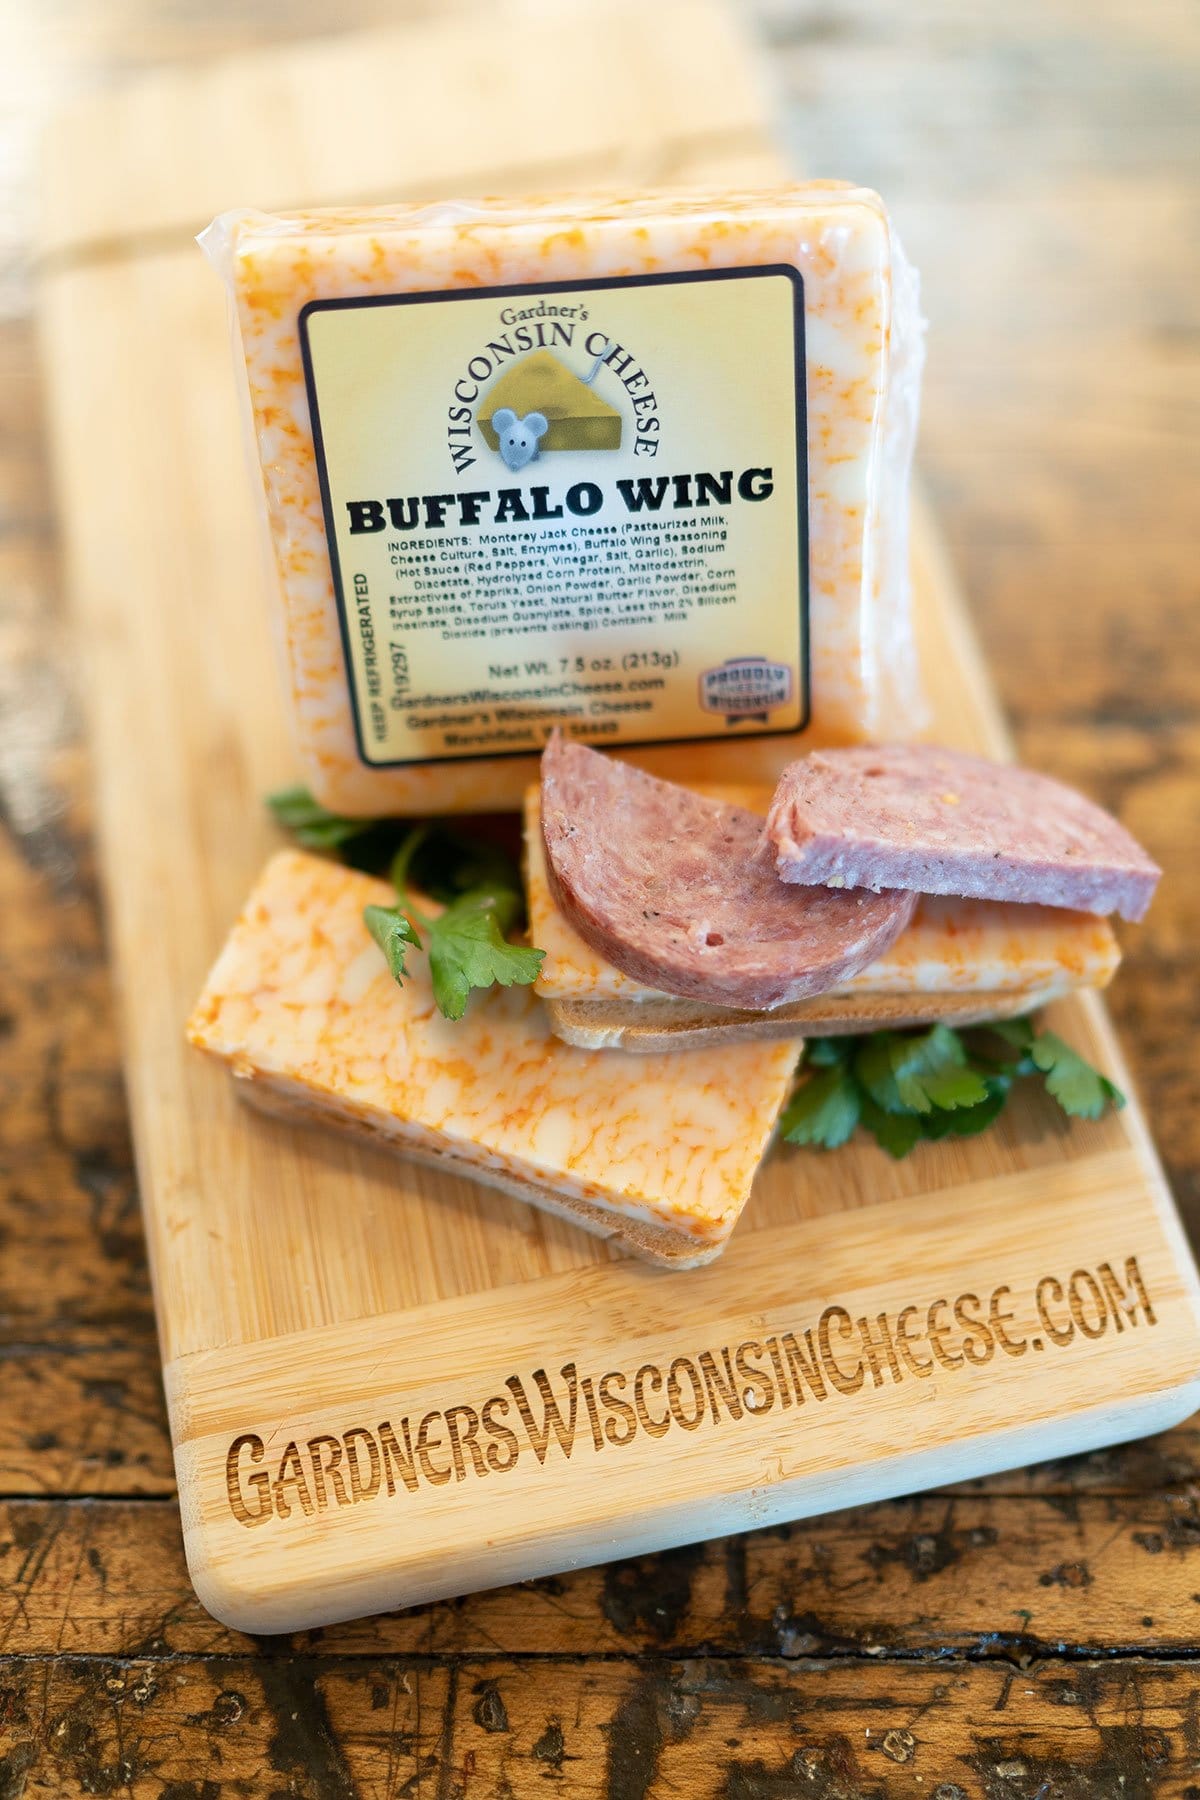 Gardner's Wisconsin Cheese and Sausage Artisan Cheeses and Meats– Gardners  Wisconsin Cheese and Sausage